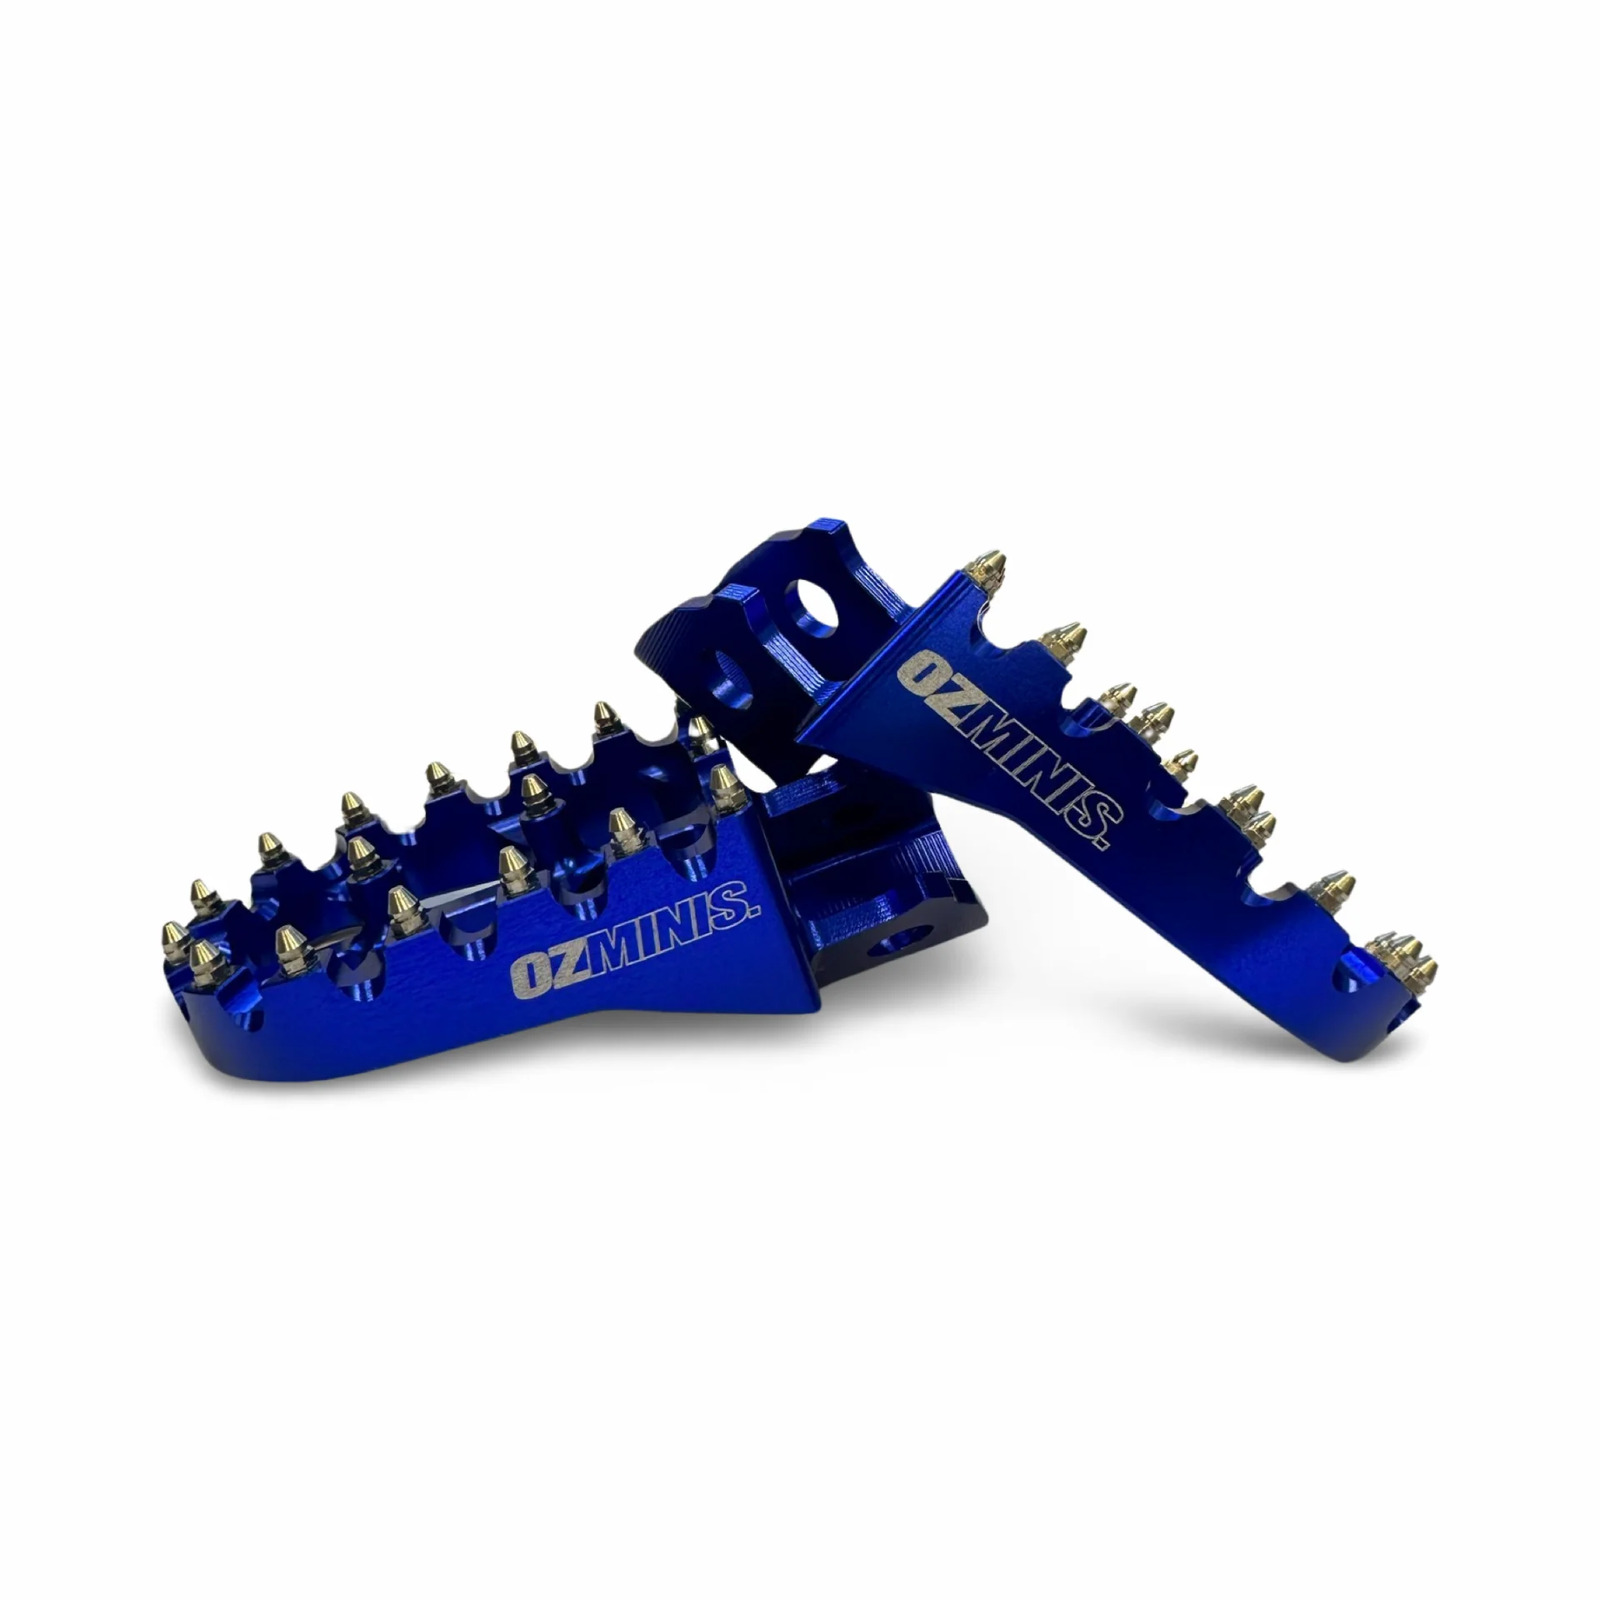 Ozminis TTR110 Direct Fit Footpegs (Blue)